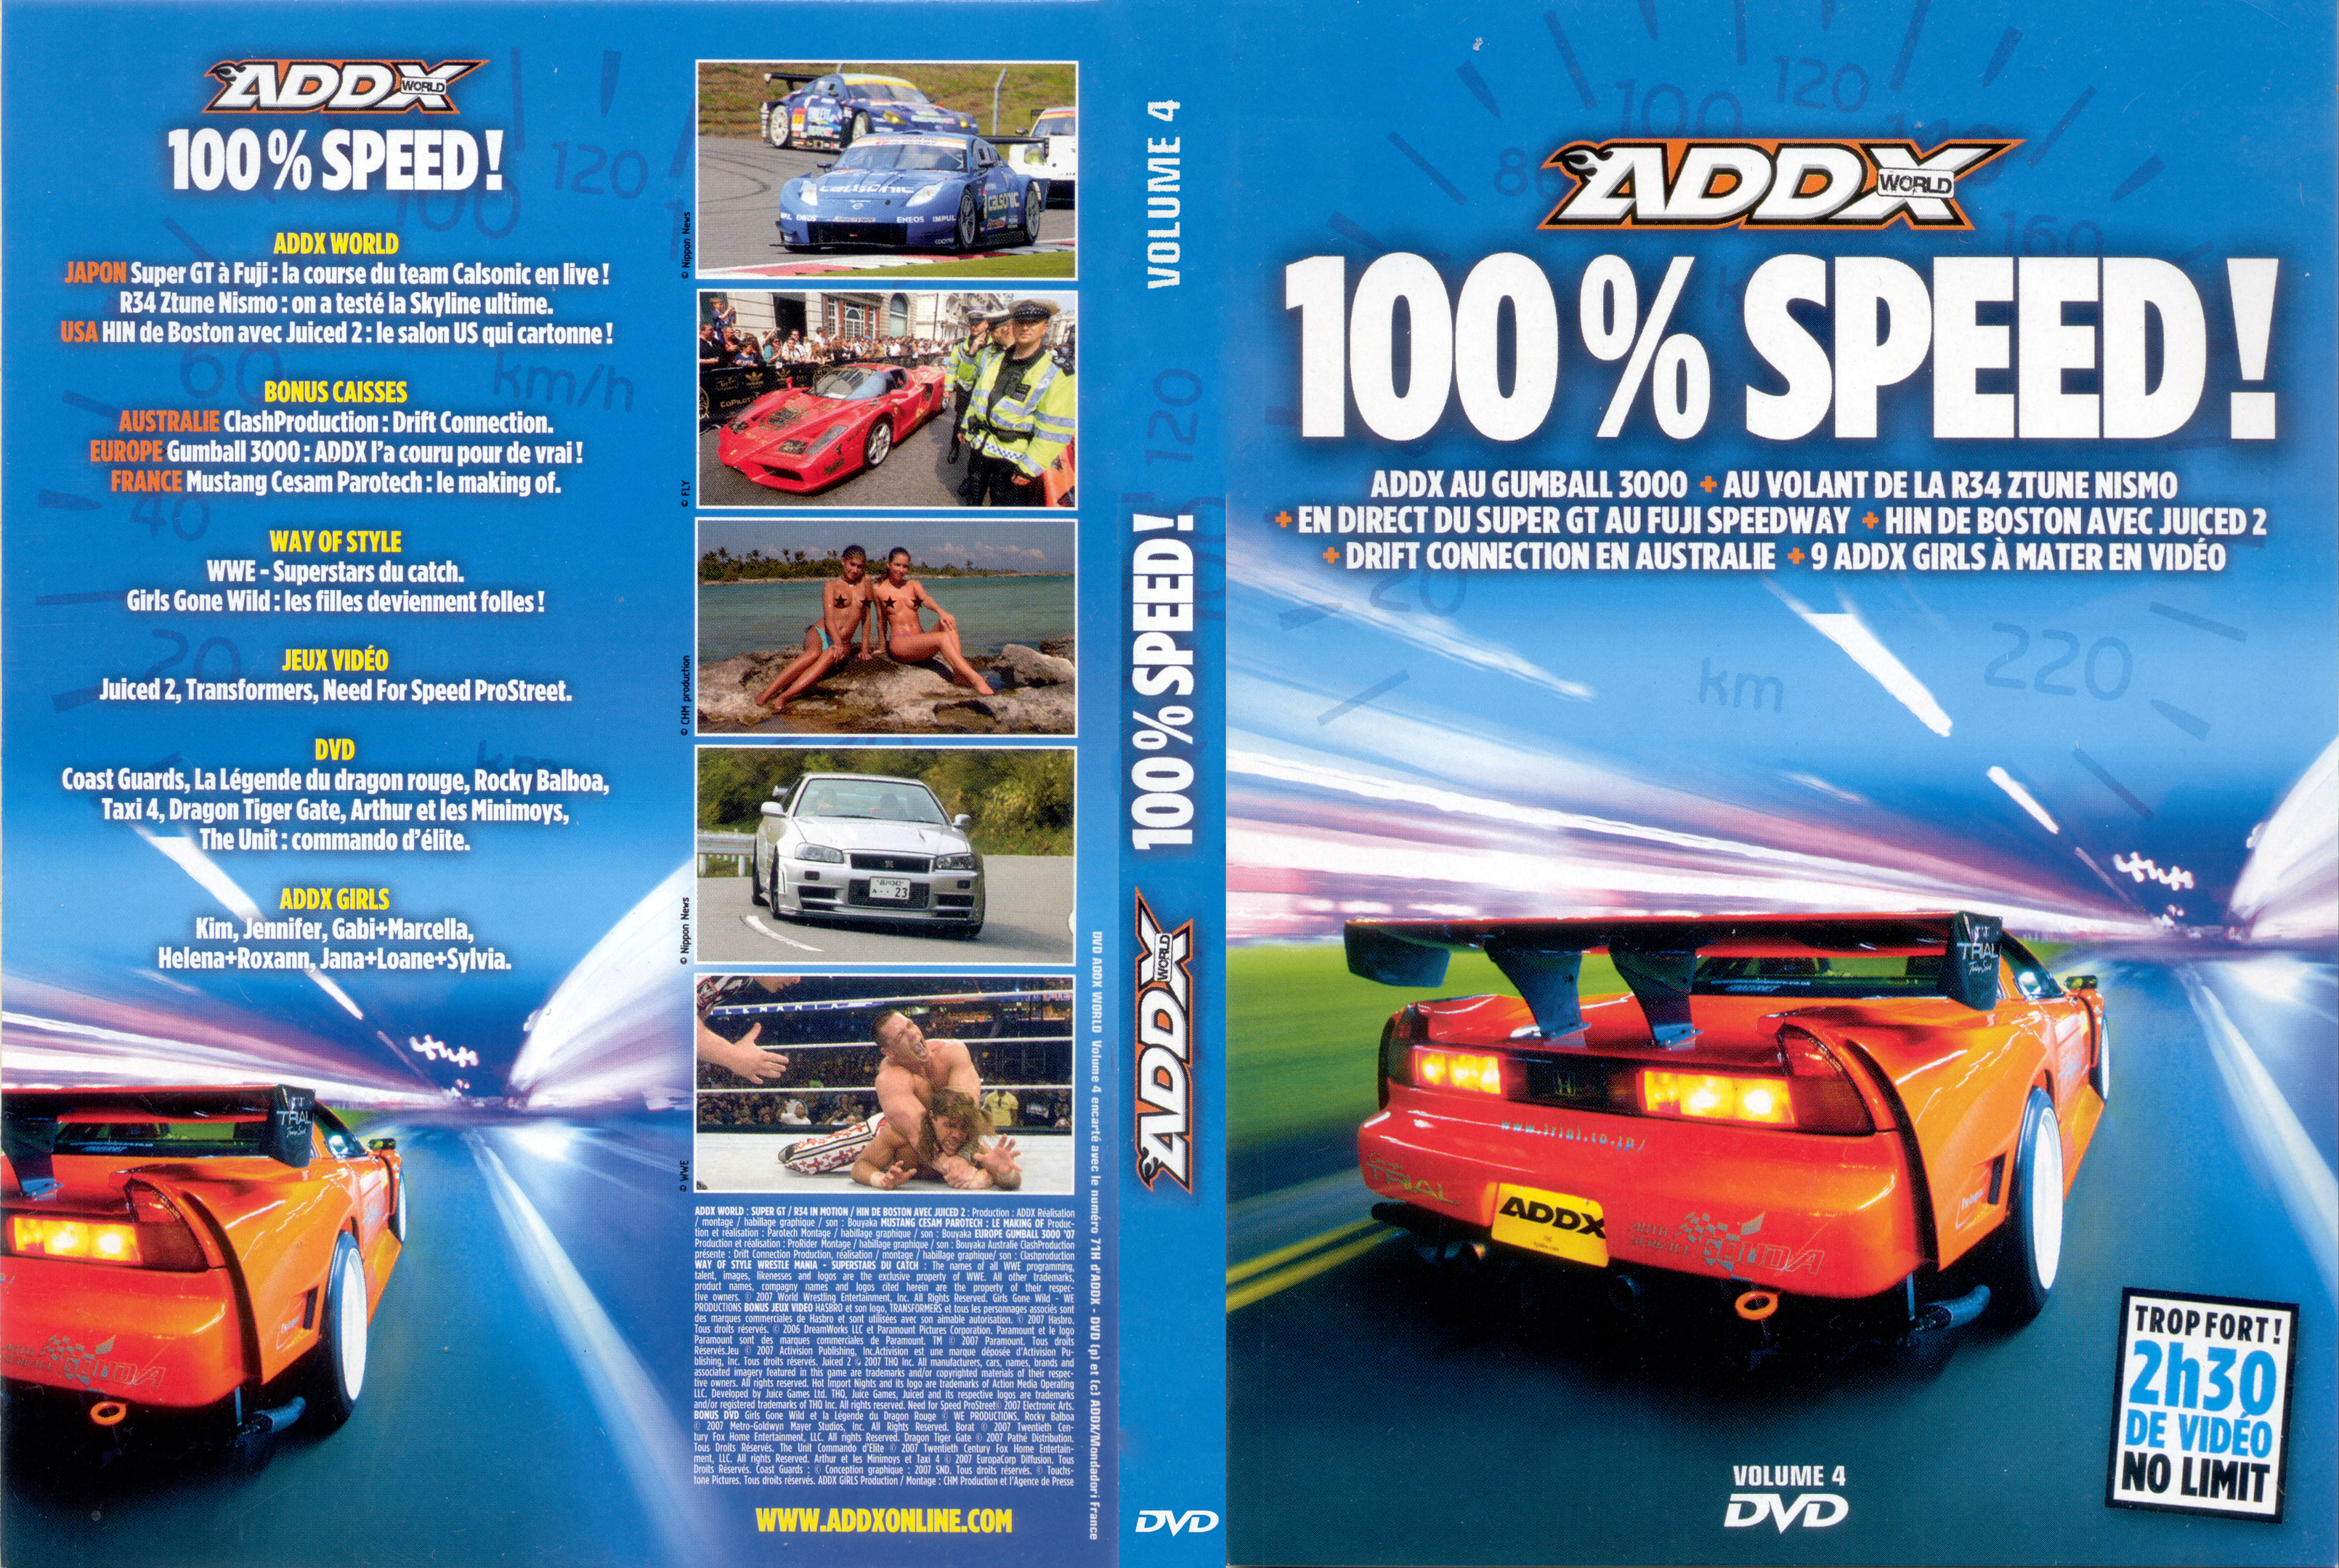 Jaquette DVD ADDX World vol 4